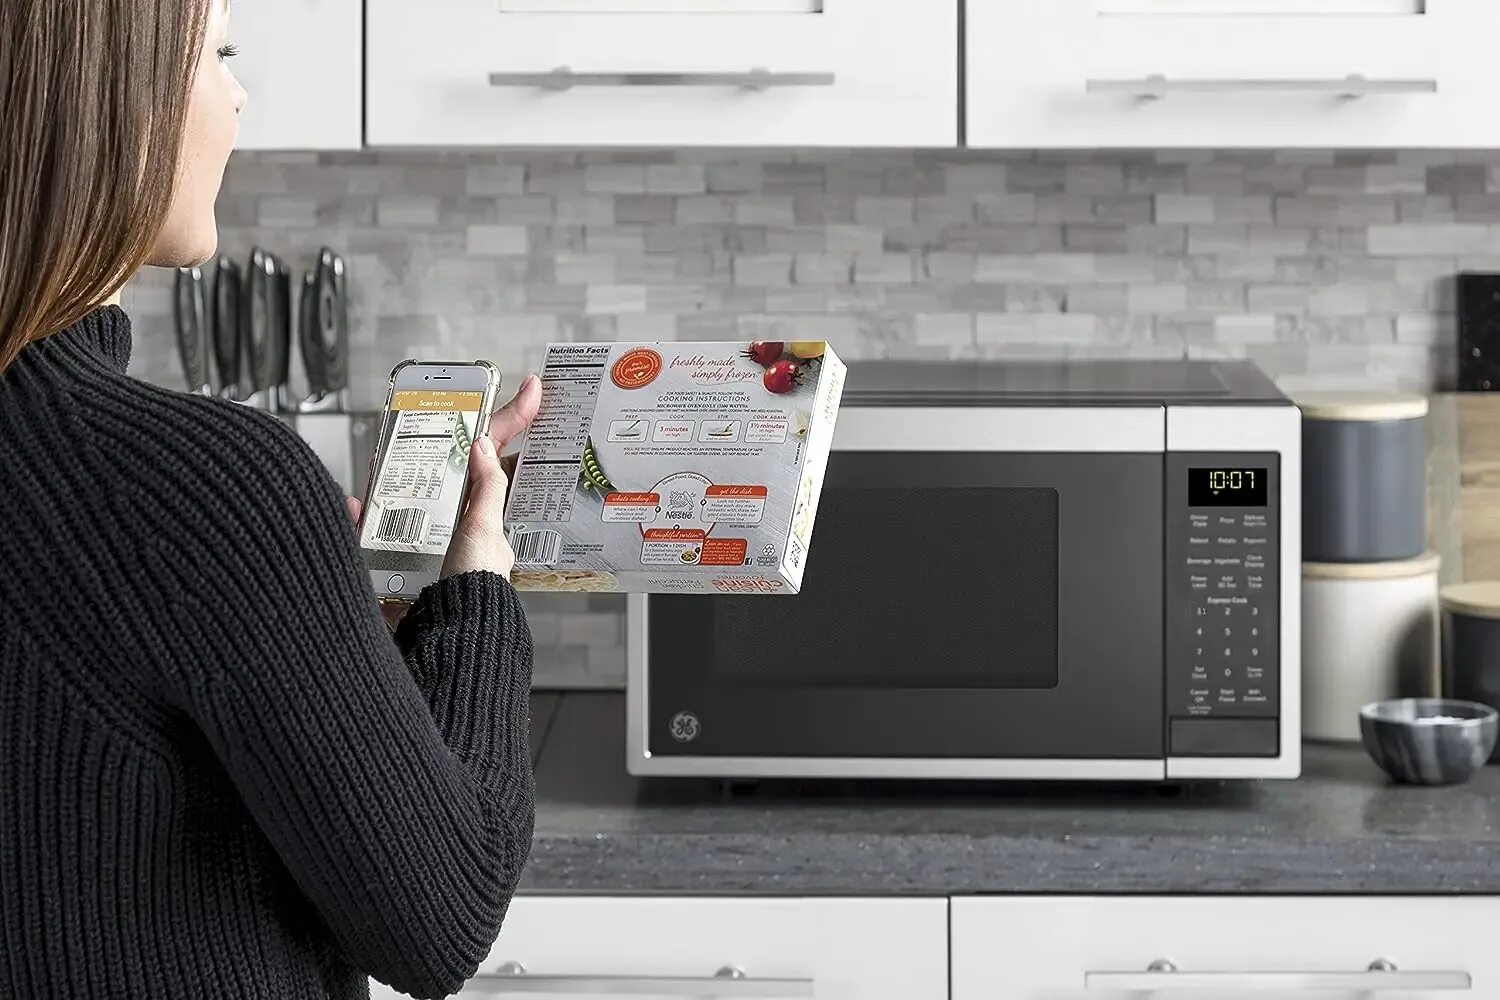 Smart Countertop Microwave Oven. Микроволновая печь Microwave Oven. СВЧ на кухне. Микроволновка на кухне. Умная микроволновка